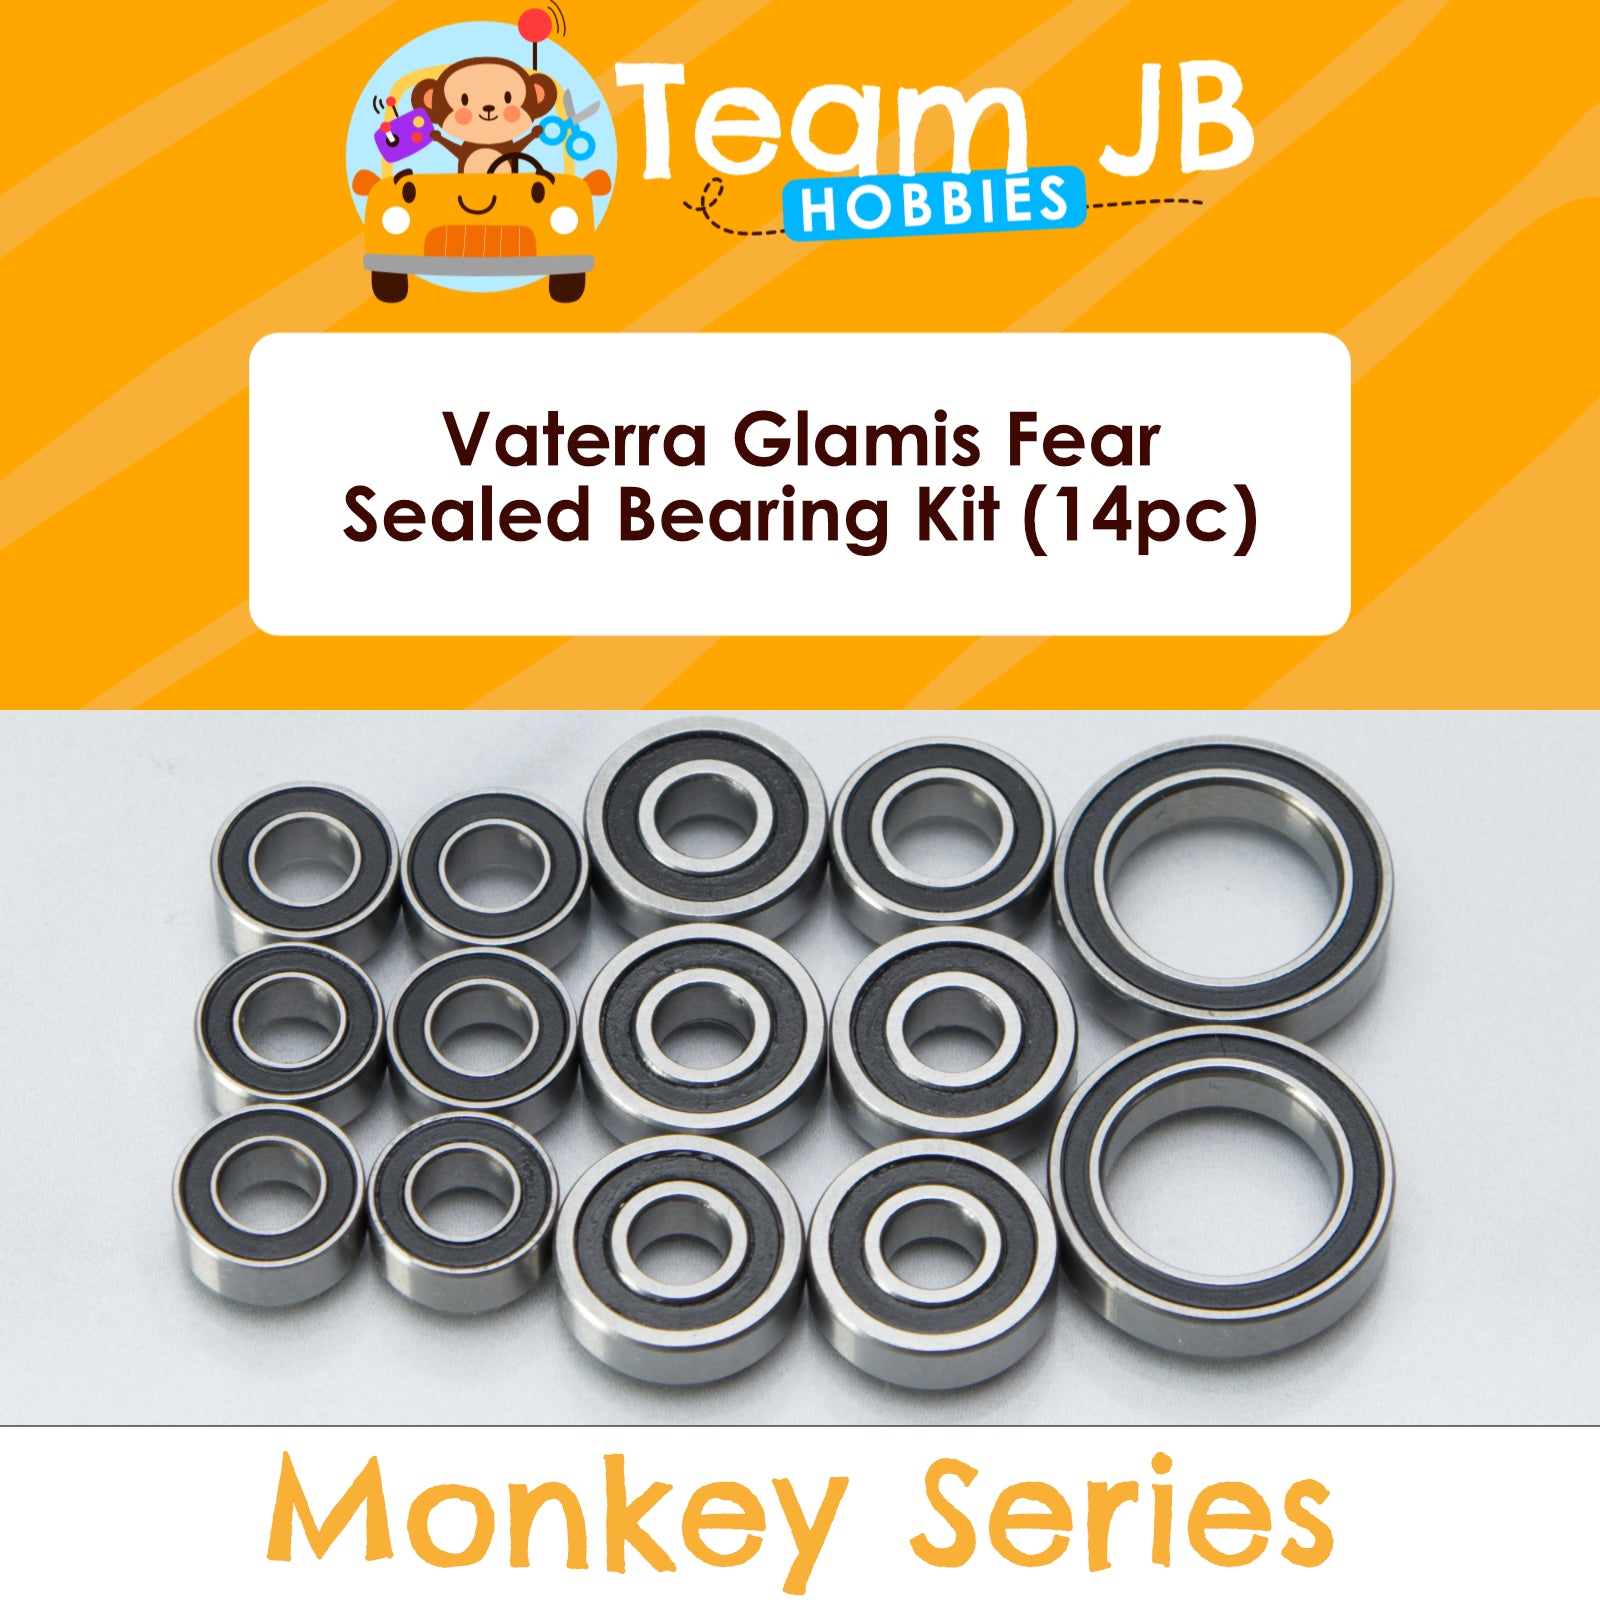 Vaterra Glamis Fear - Sealed Bearing Kit